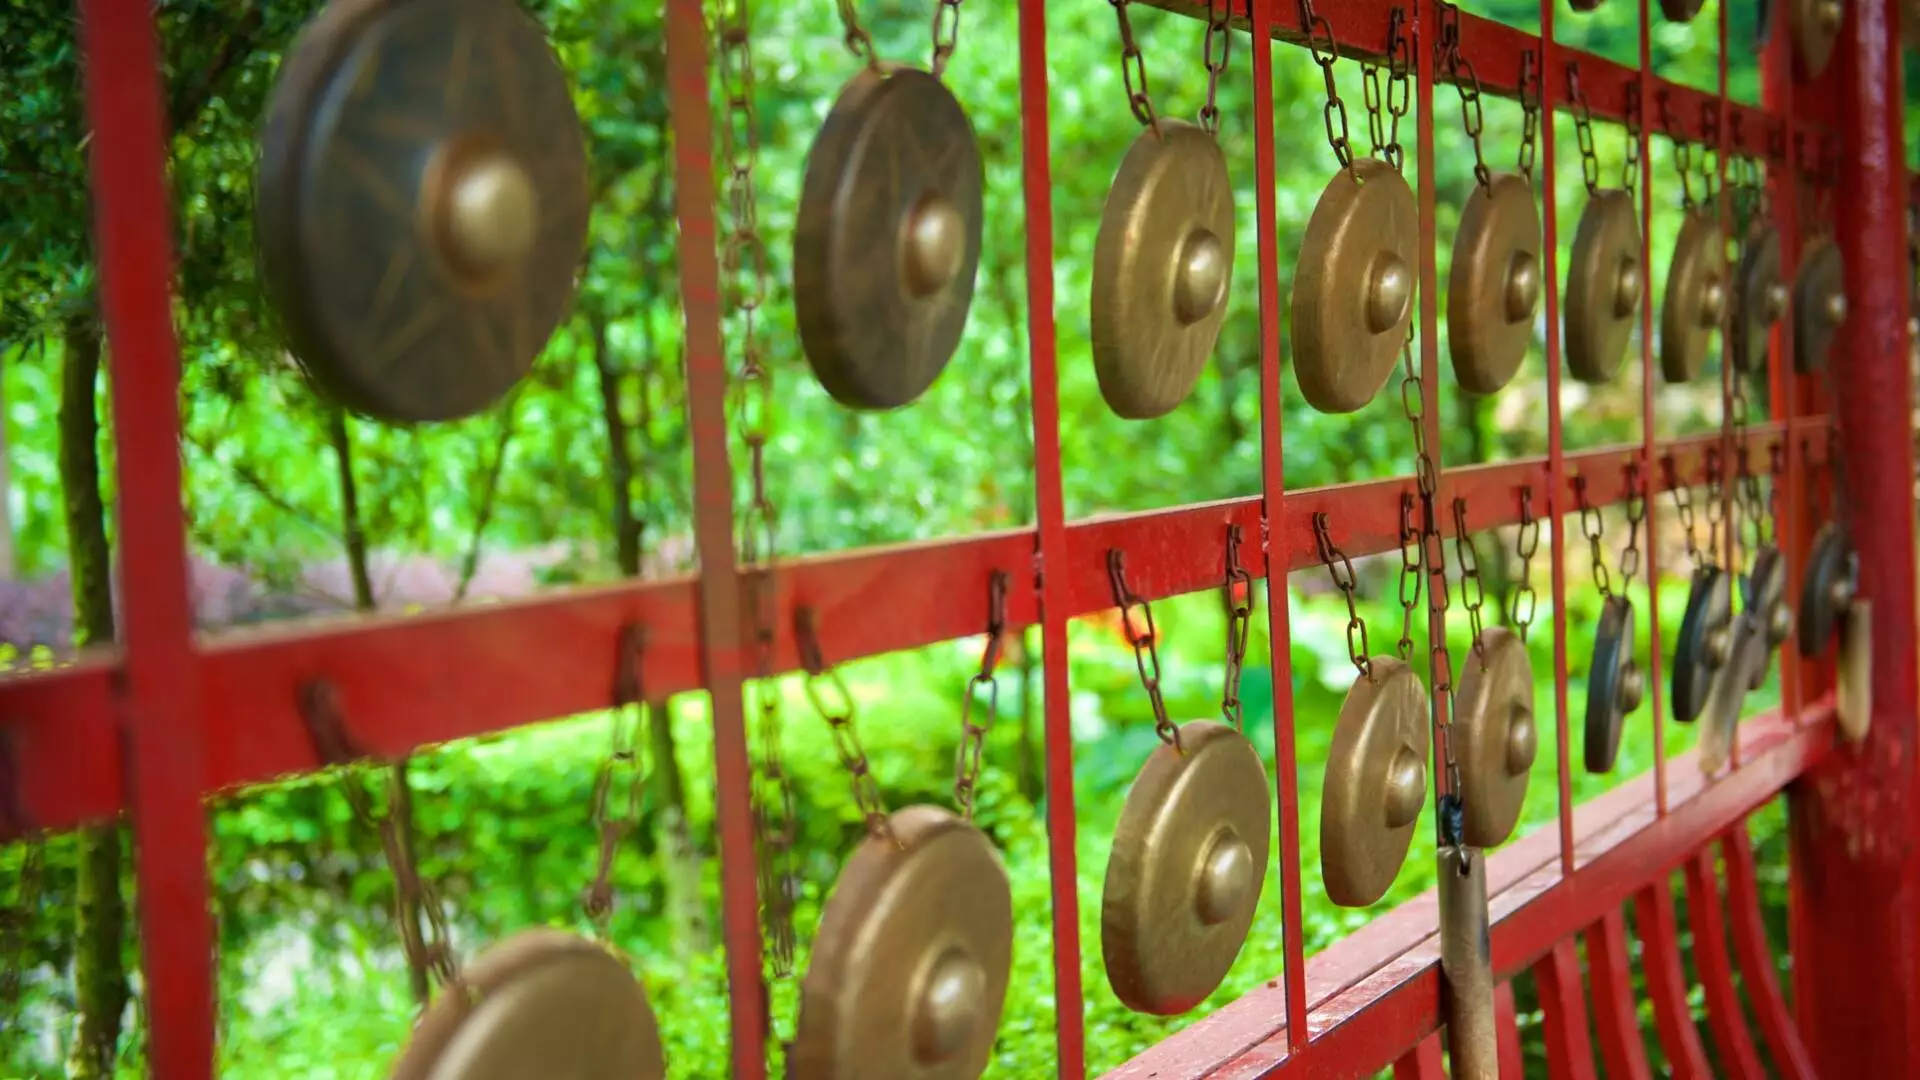 Lijiang Folk Customs Garden On Guilin In China